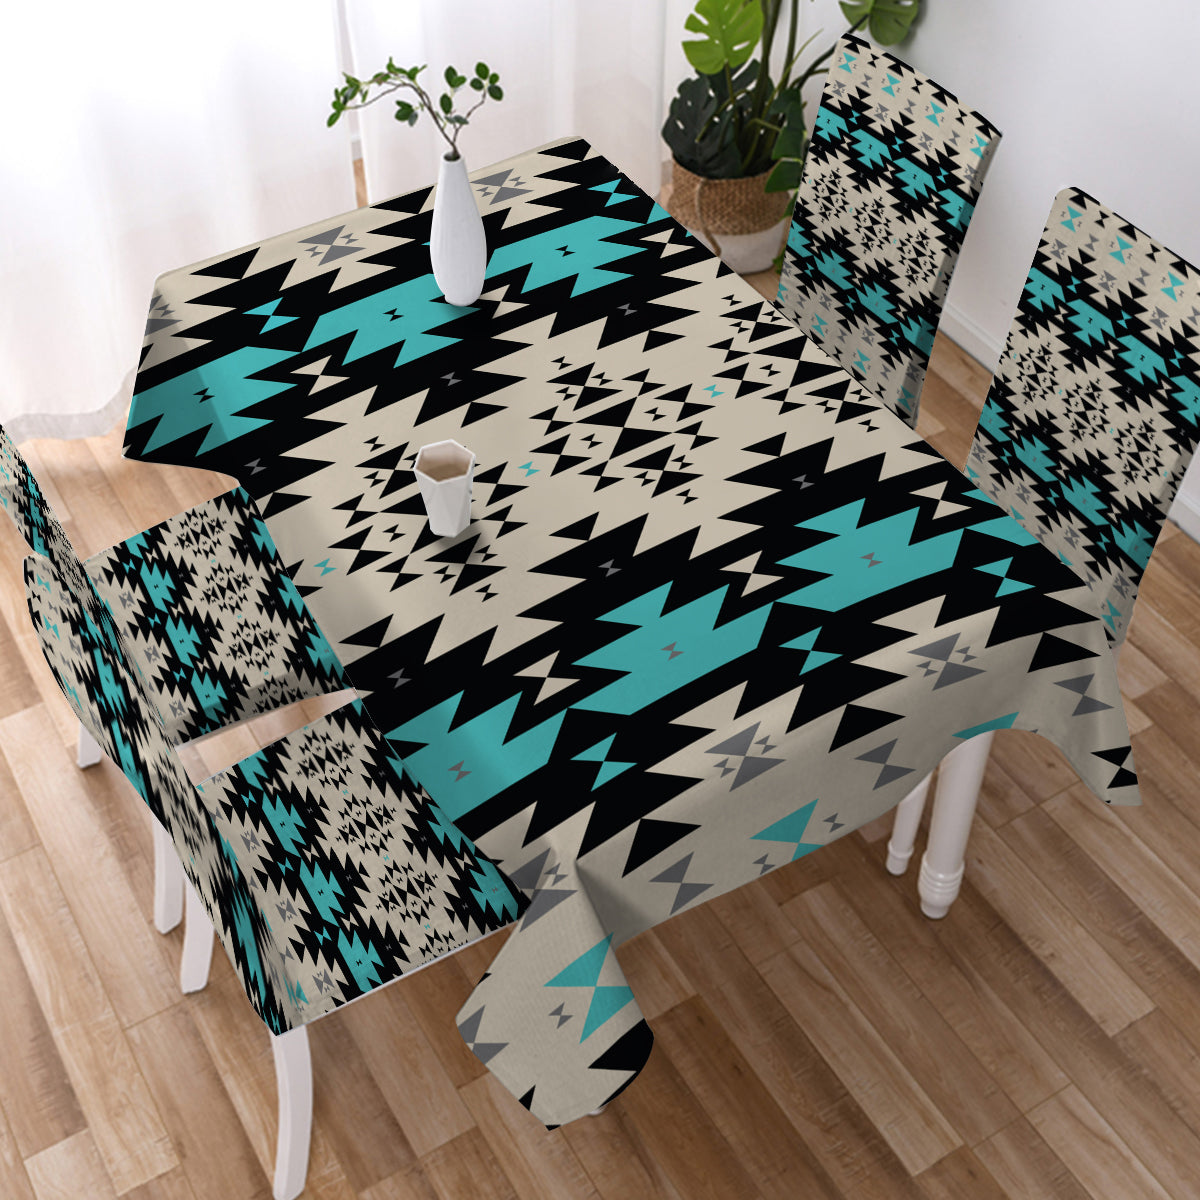 Powwow Store gb nat00606geometric seamless pattern tablecloth